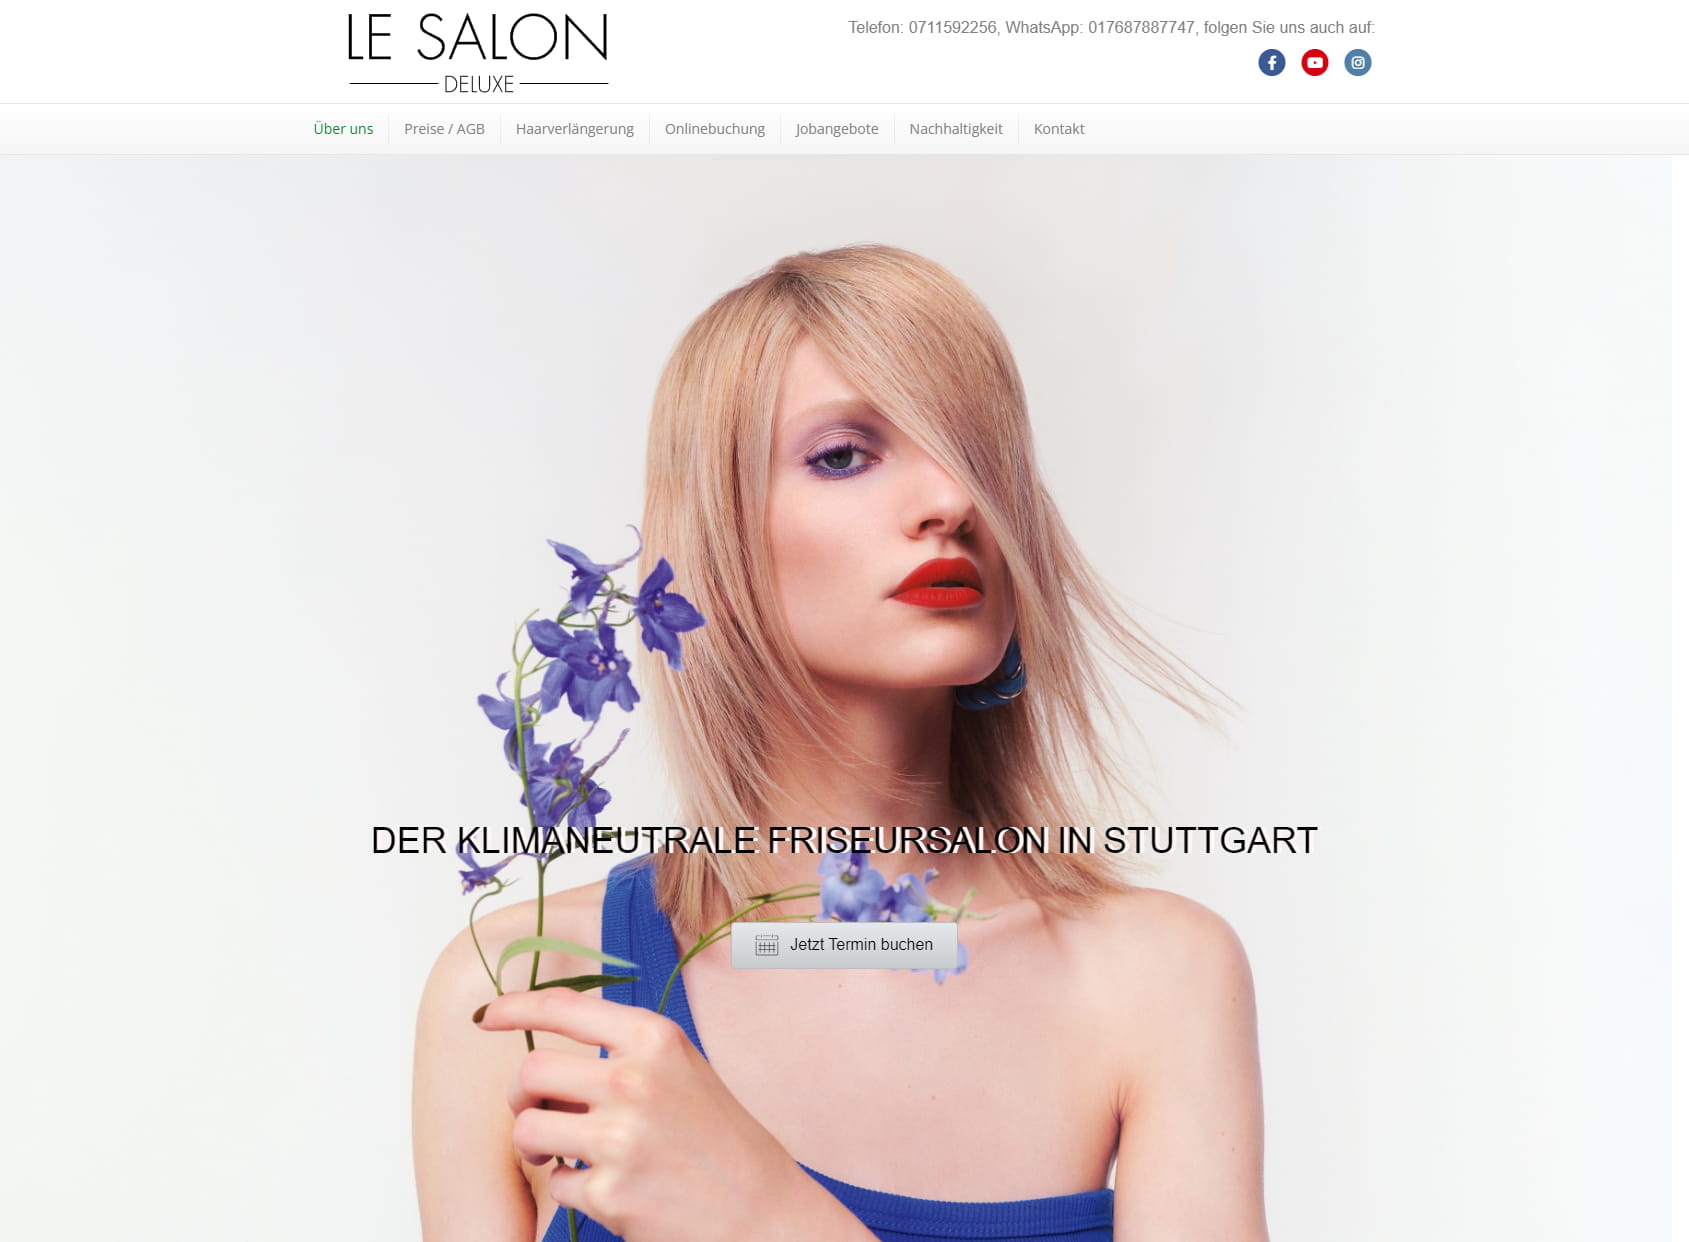 LE SALON DELUXE - The 5 star hairdresser